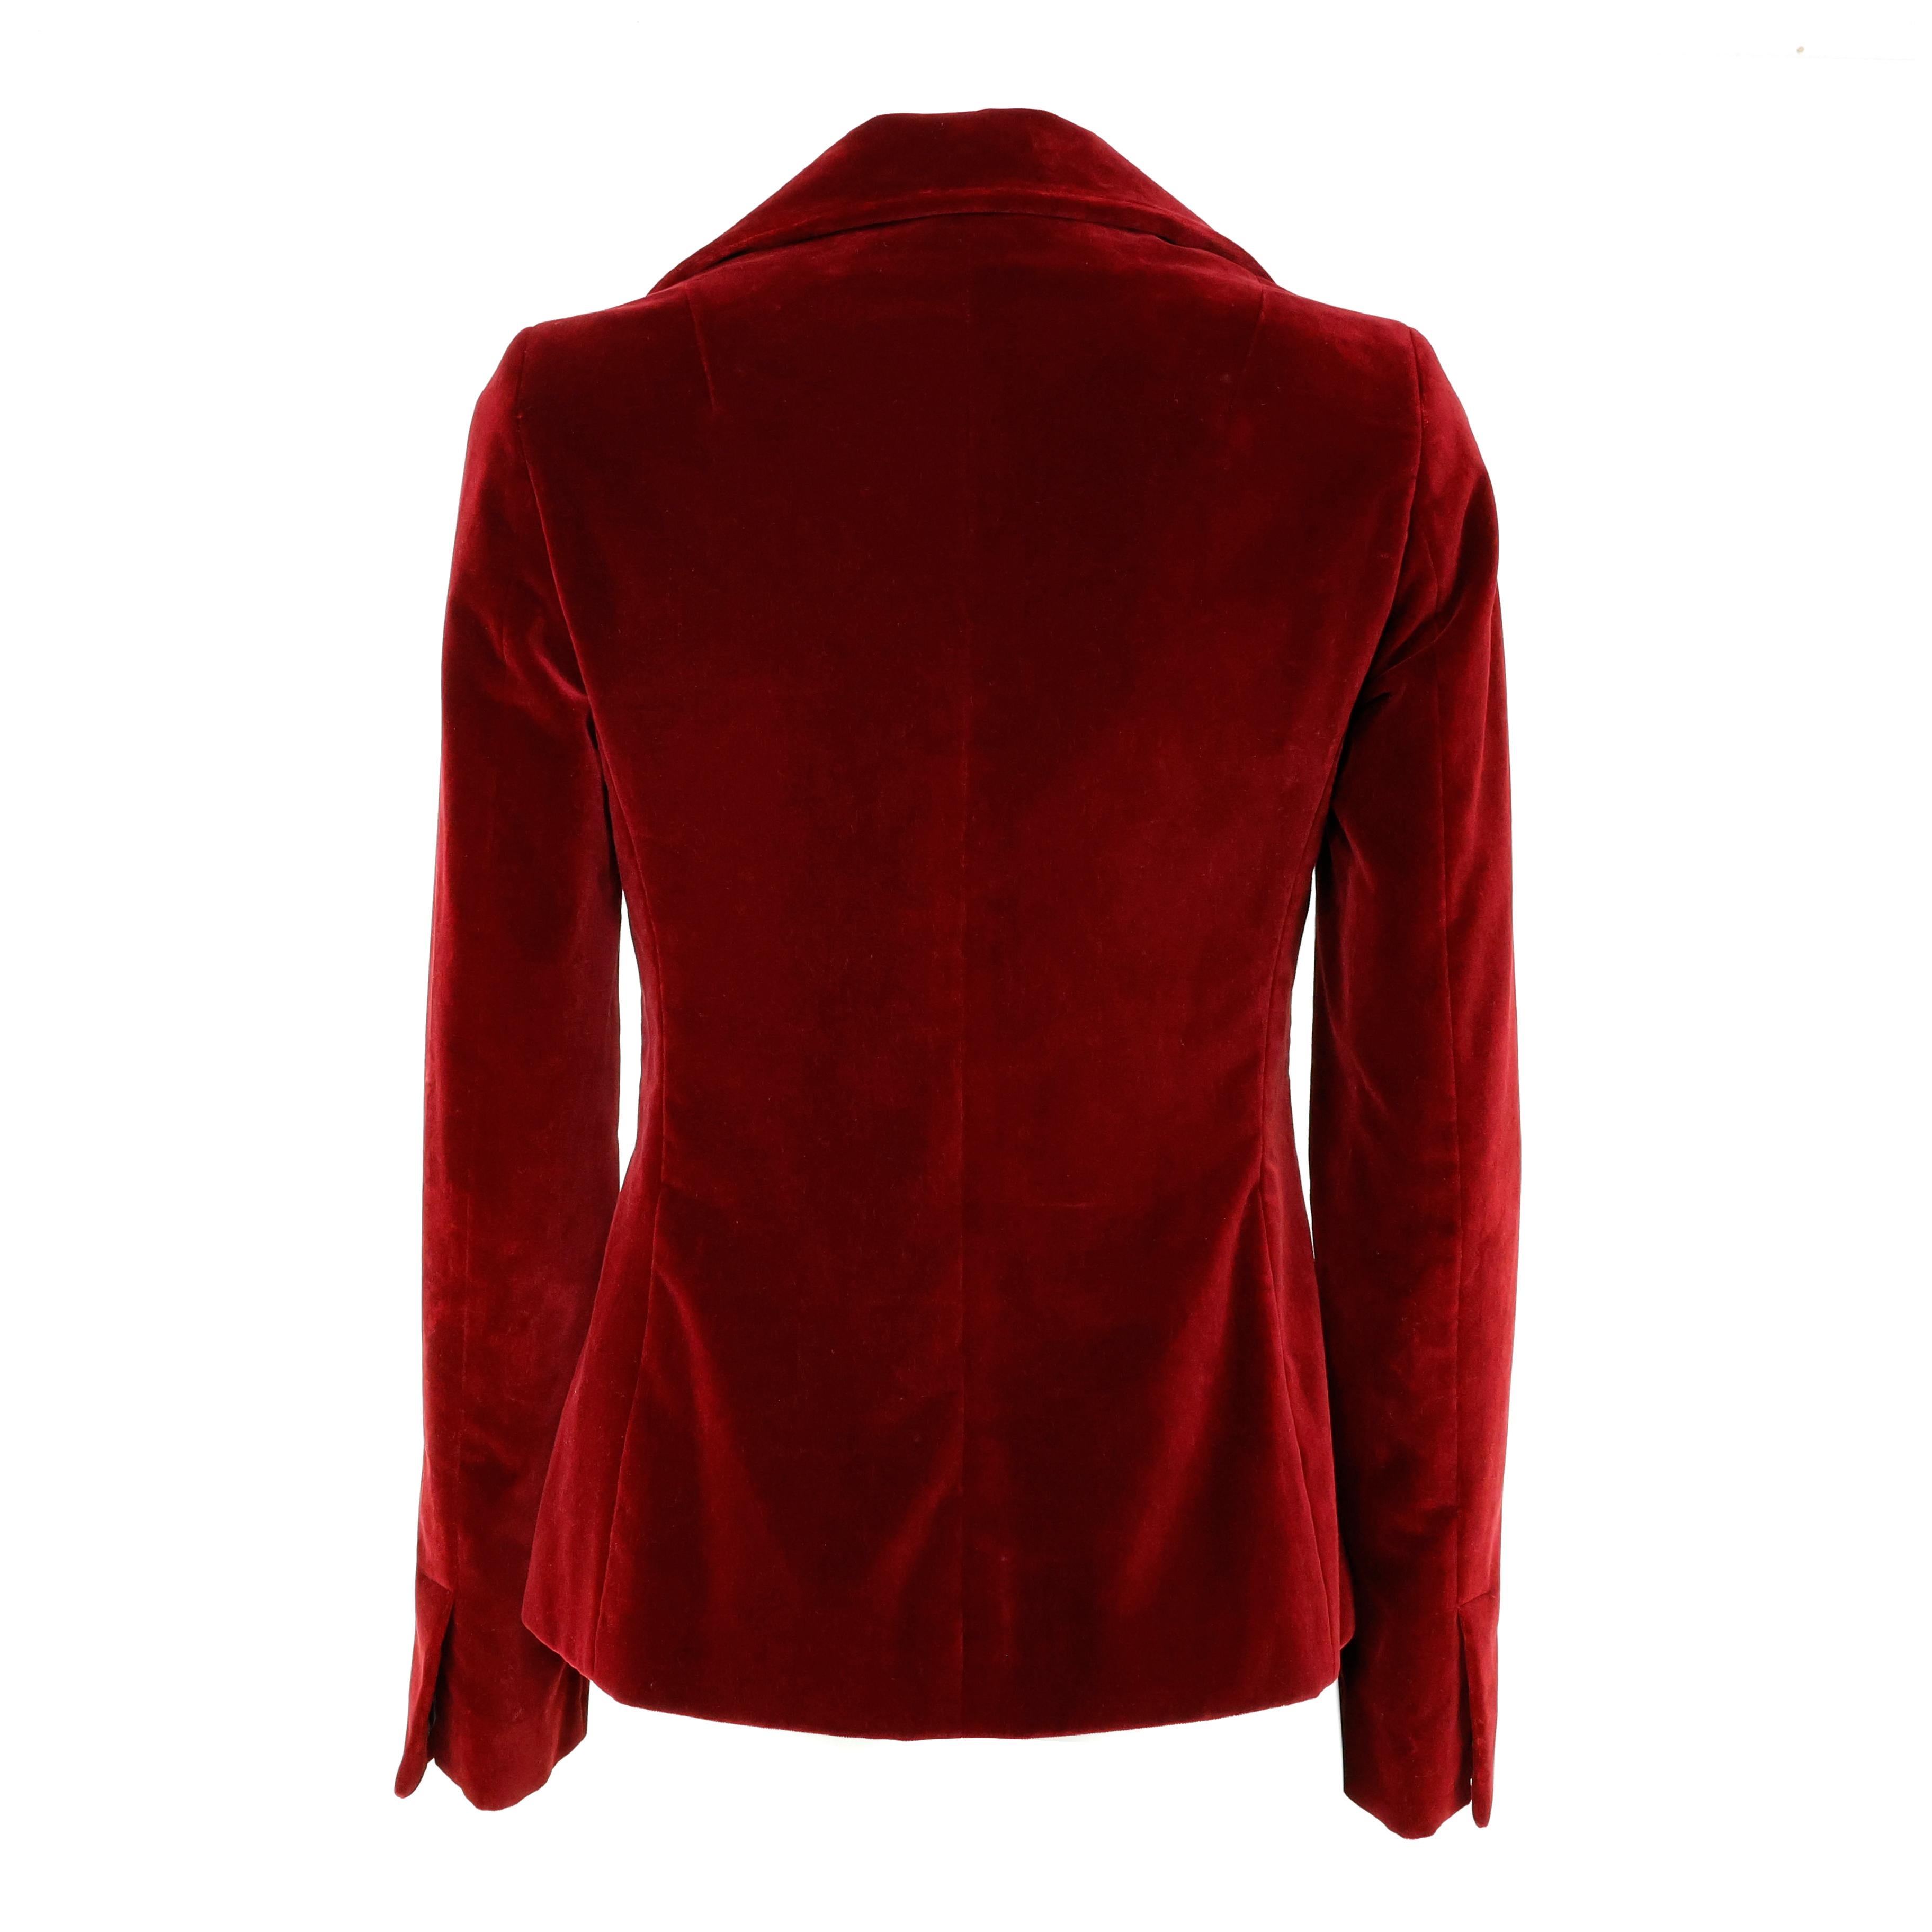 Dolce e Gabbana velvet Jacket / Blazer In Excellent Condition For Sale In Bressanone, IT